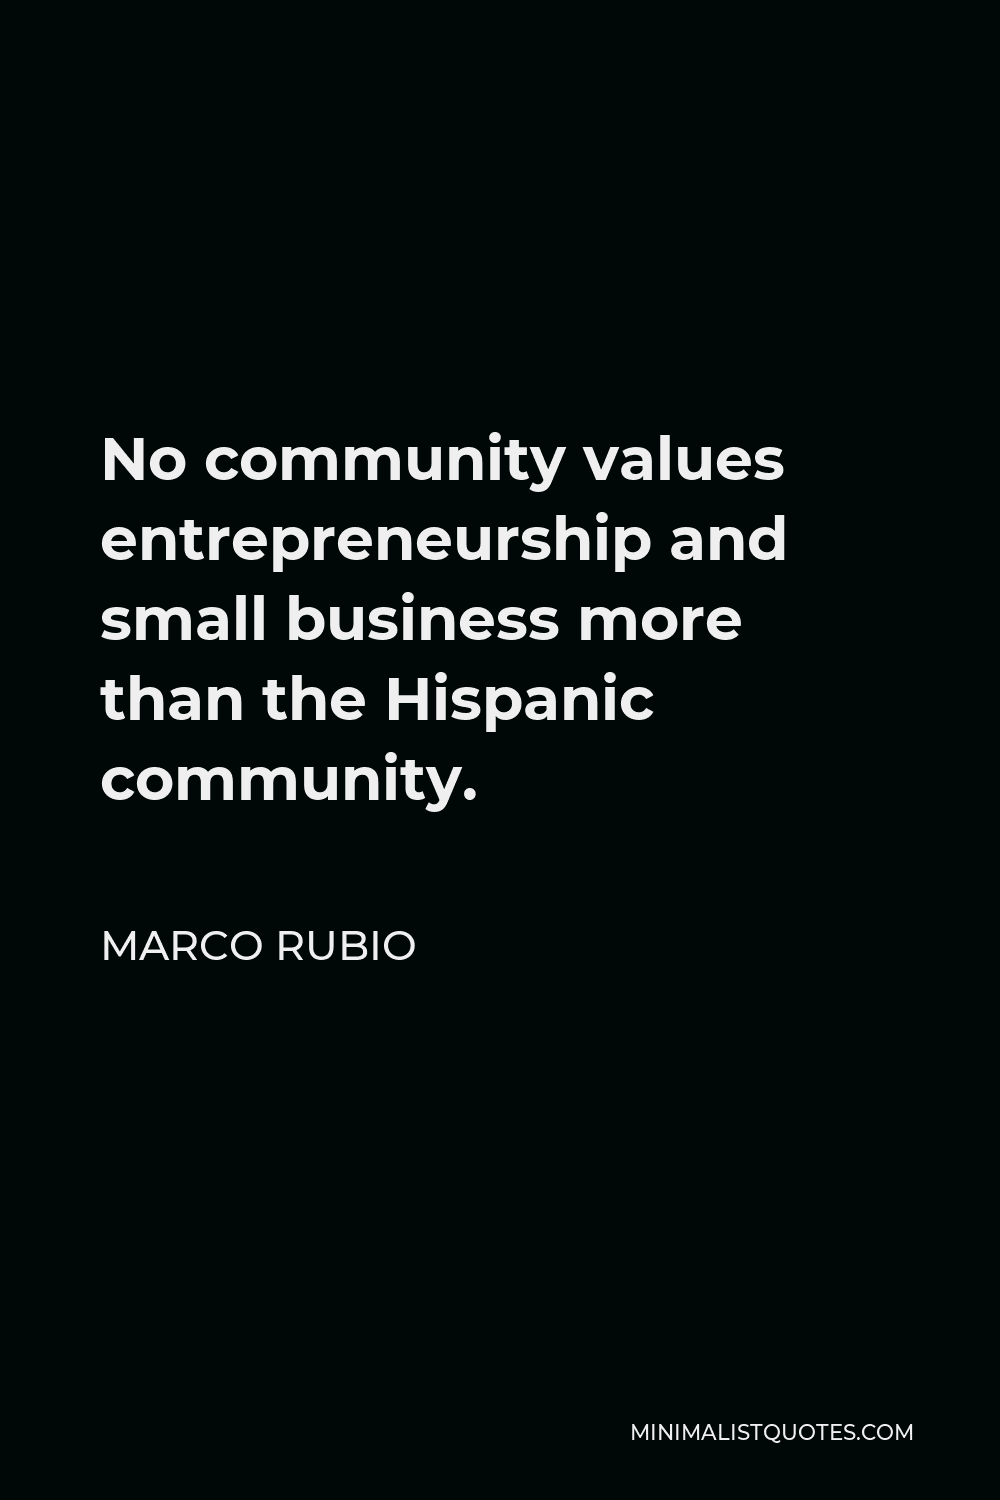 Marco Rubio Quote - No community values entrepreneurship and small business more than the Hispanic community.